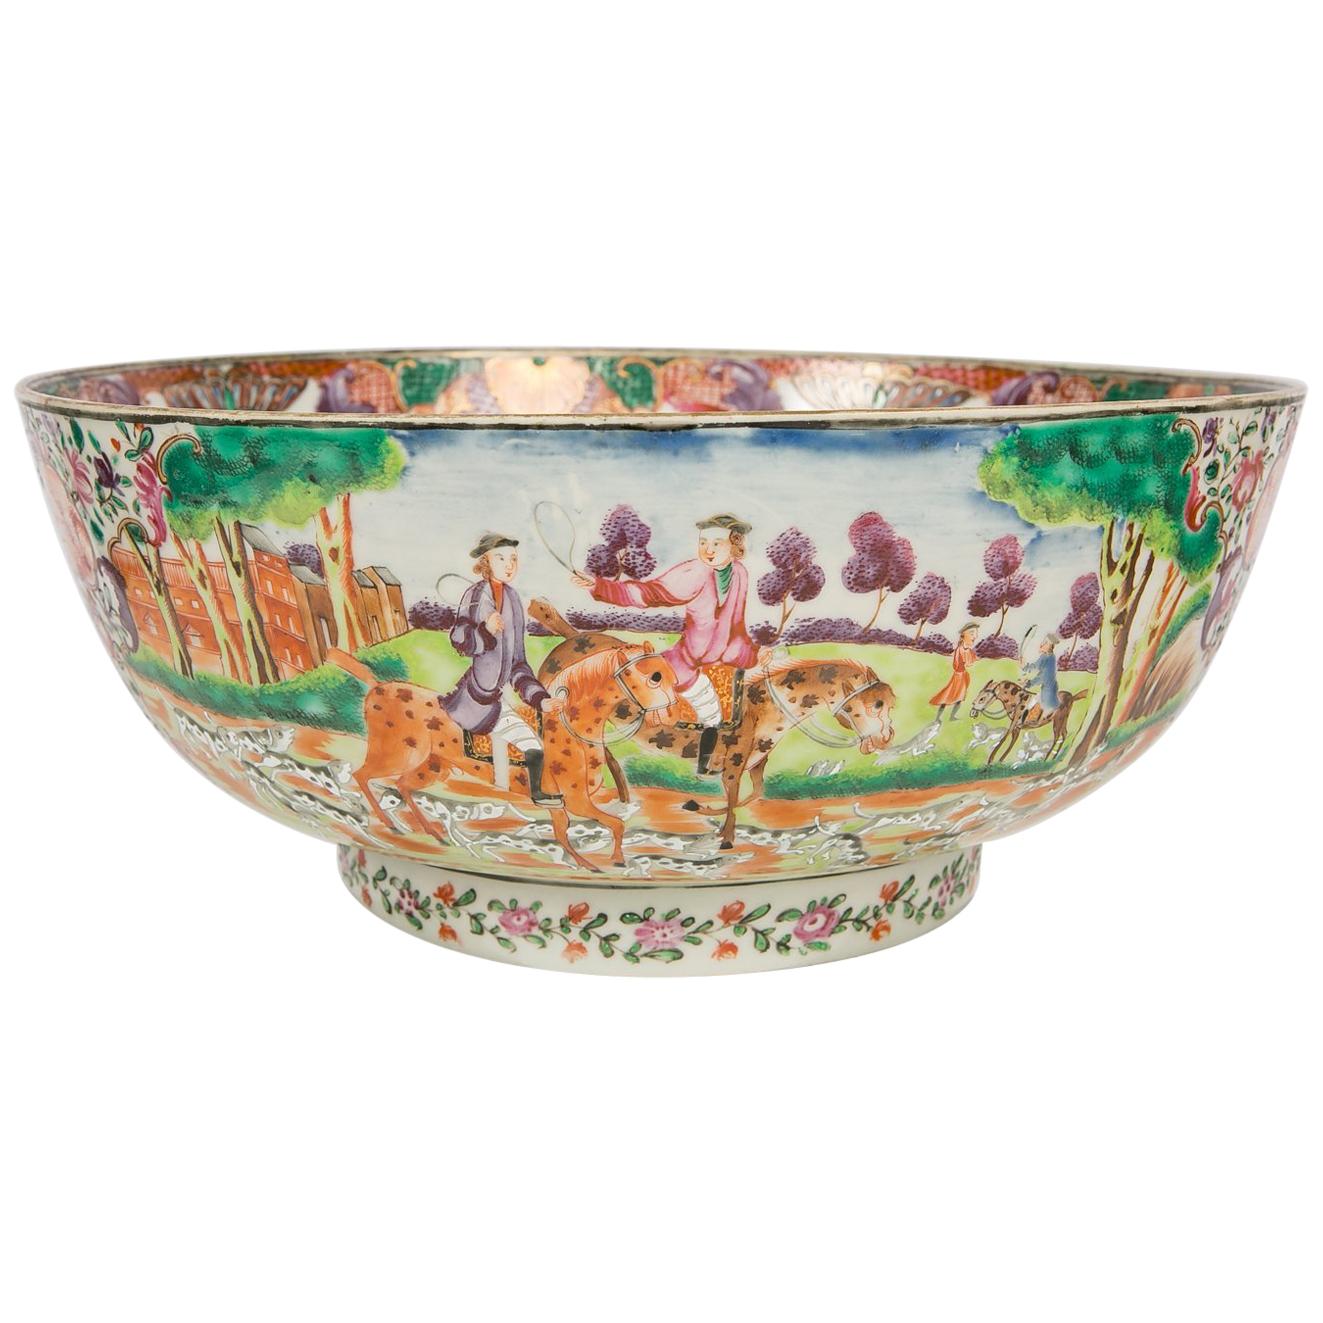 Antique Chinese Porcelain Hunt Bowl circa 1770